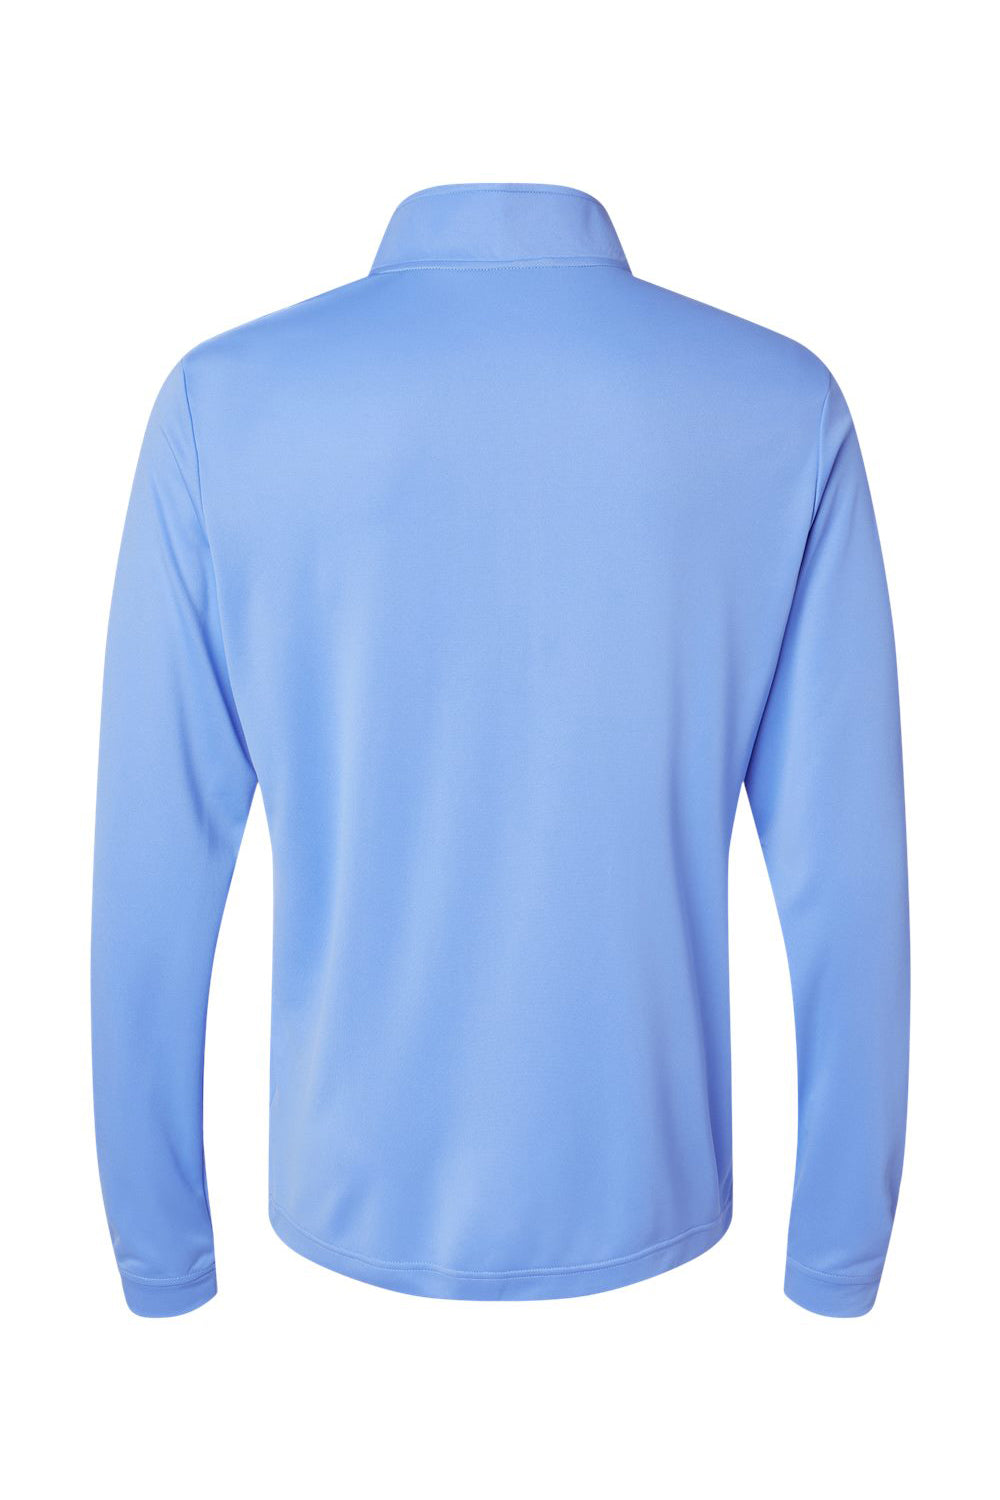 Adidas A401 Mens UPF 50+ 1/4 Zip Sweatshirt Blue Fusion Flat Back